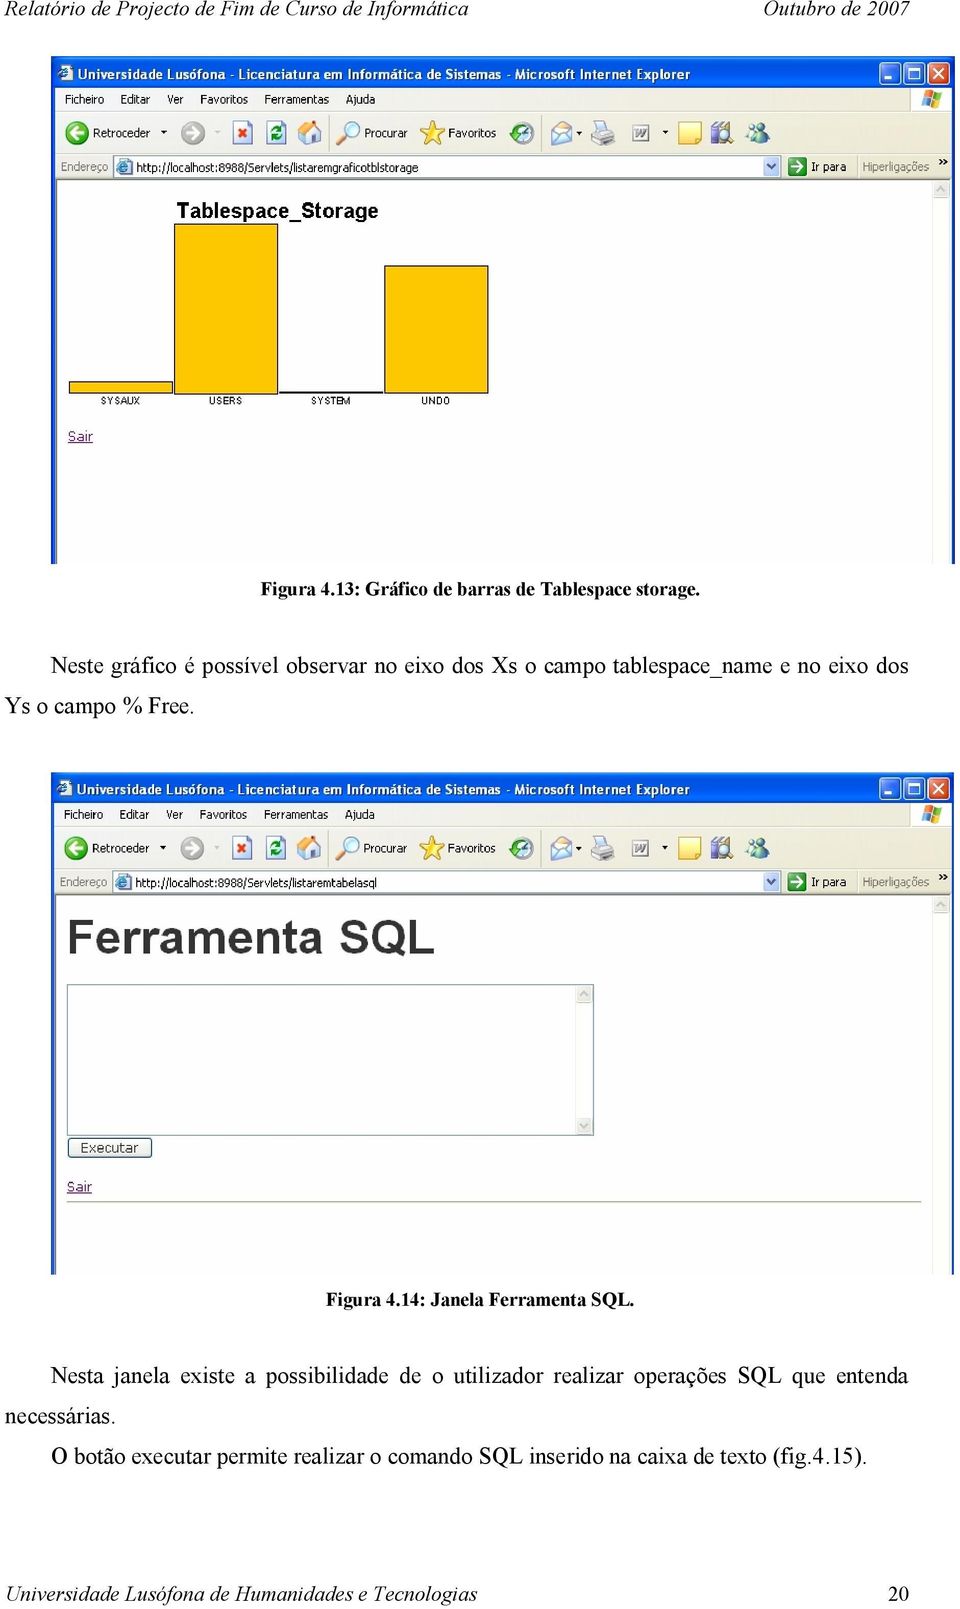 Figura 4.14: Janela Ferramenta SQL.